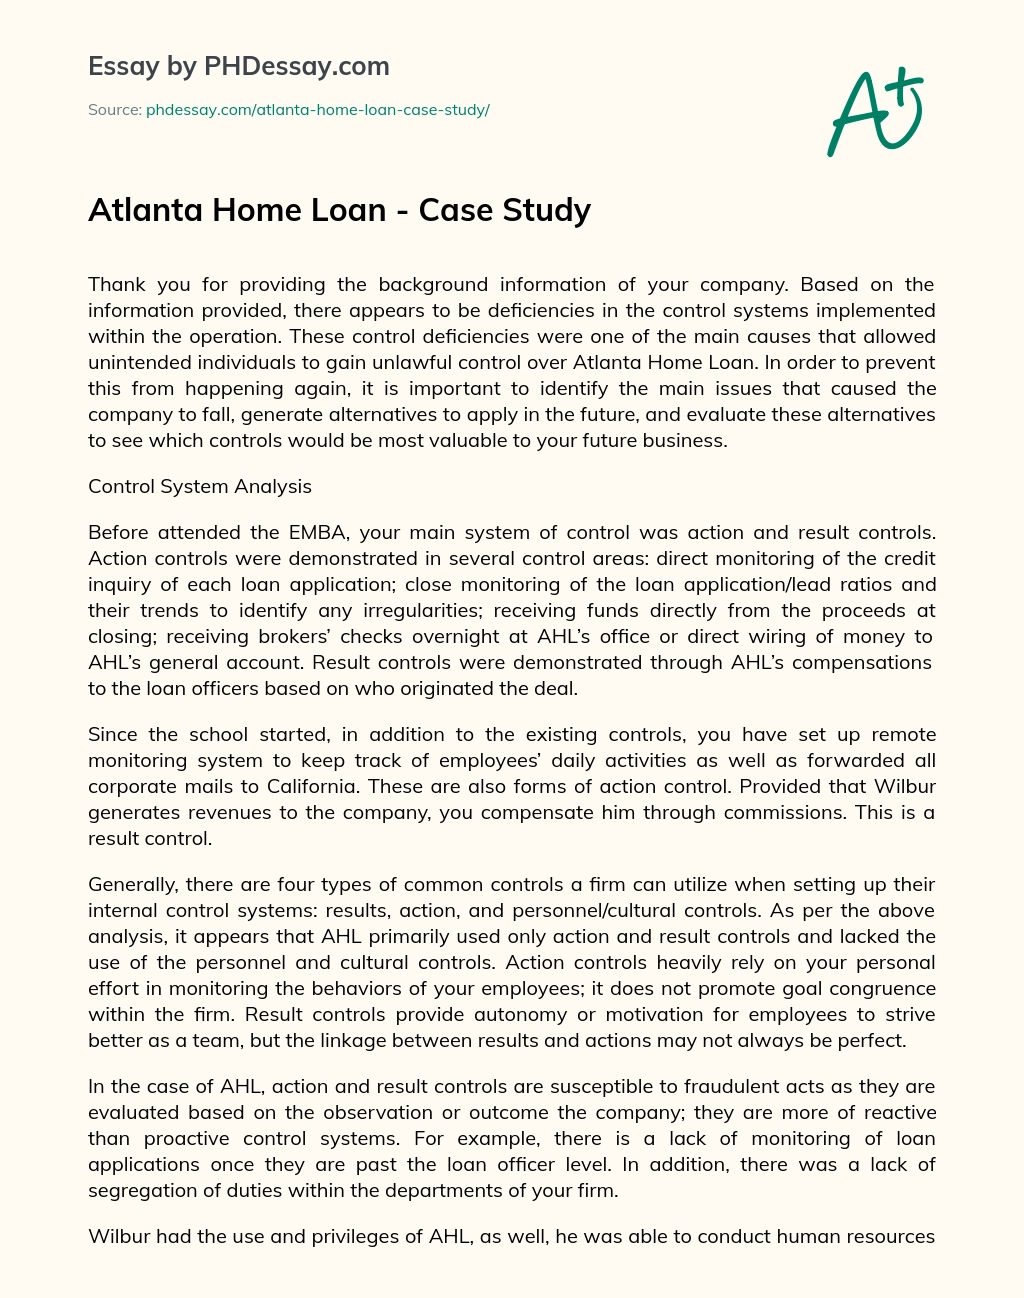 atlanta home loan case study solution